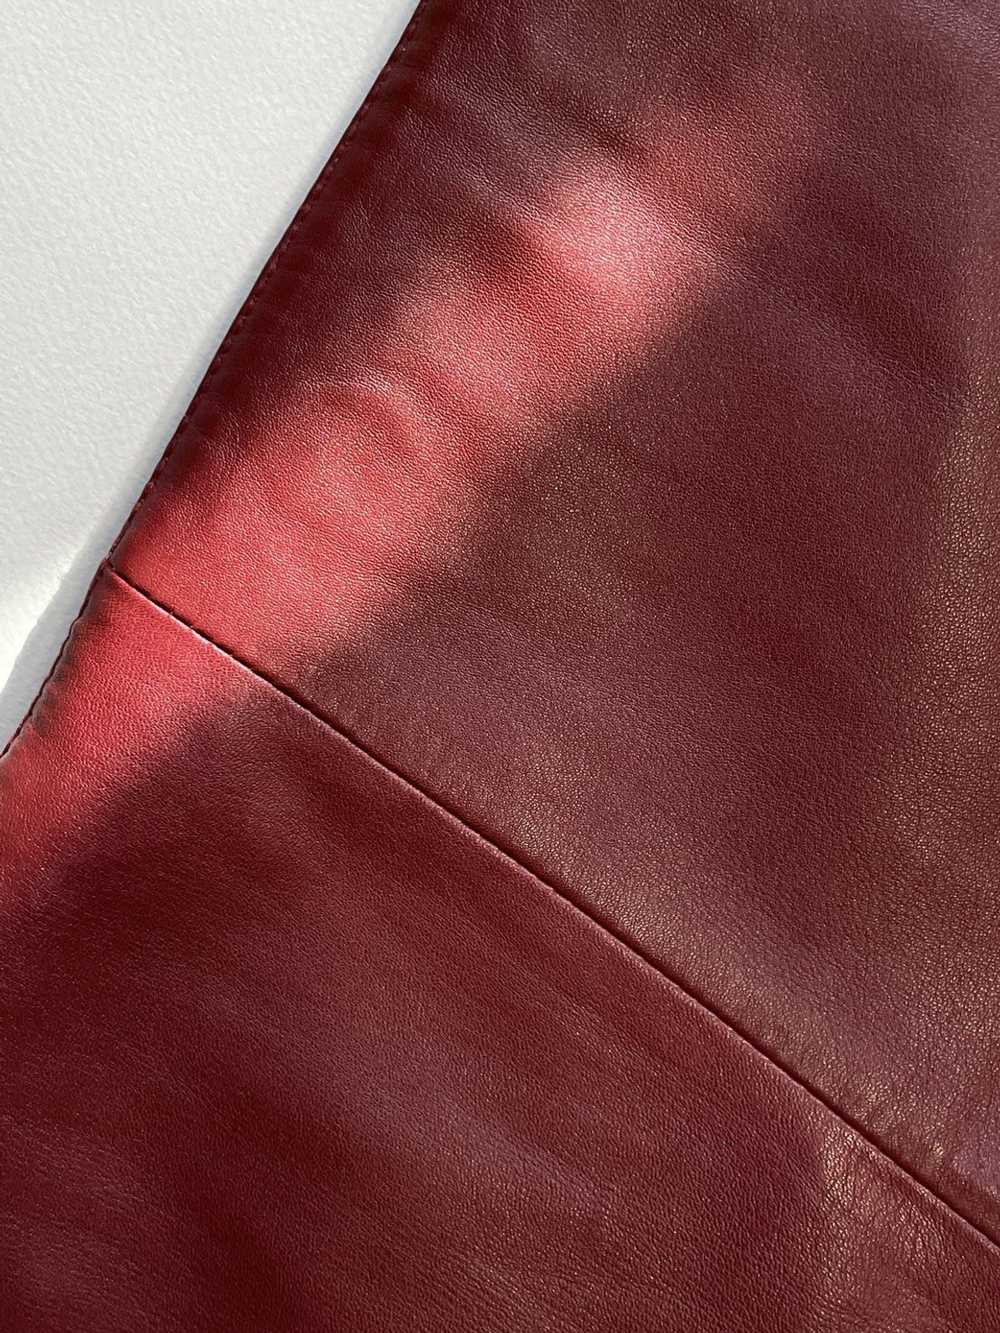 Japanese Brand × Vintage Genuine Leather Pants - image 9